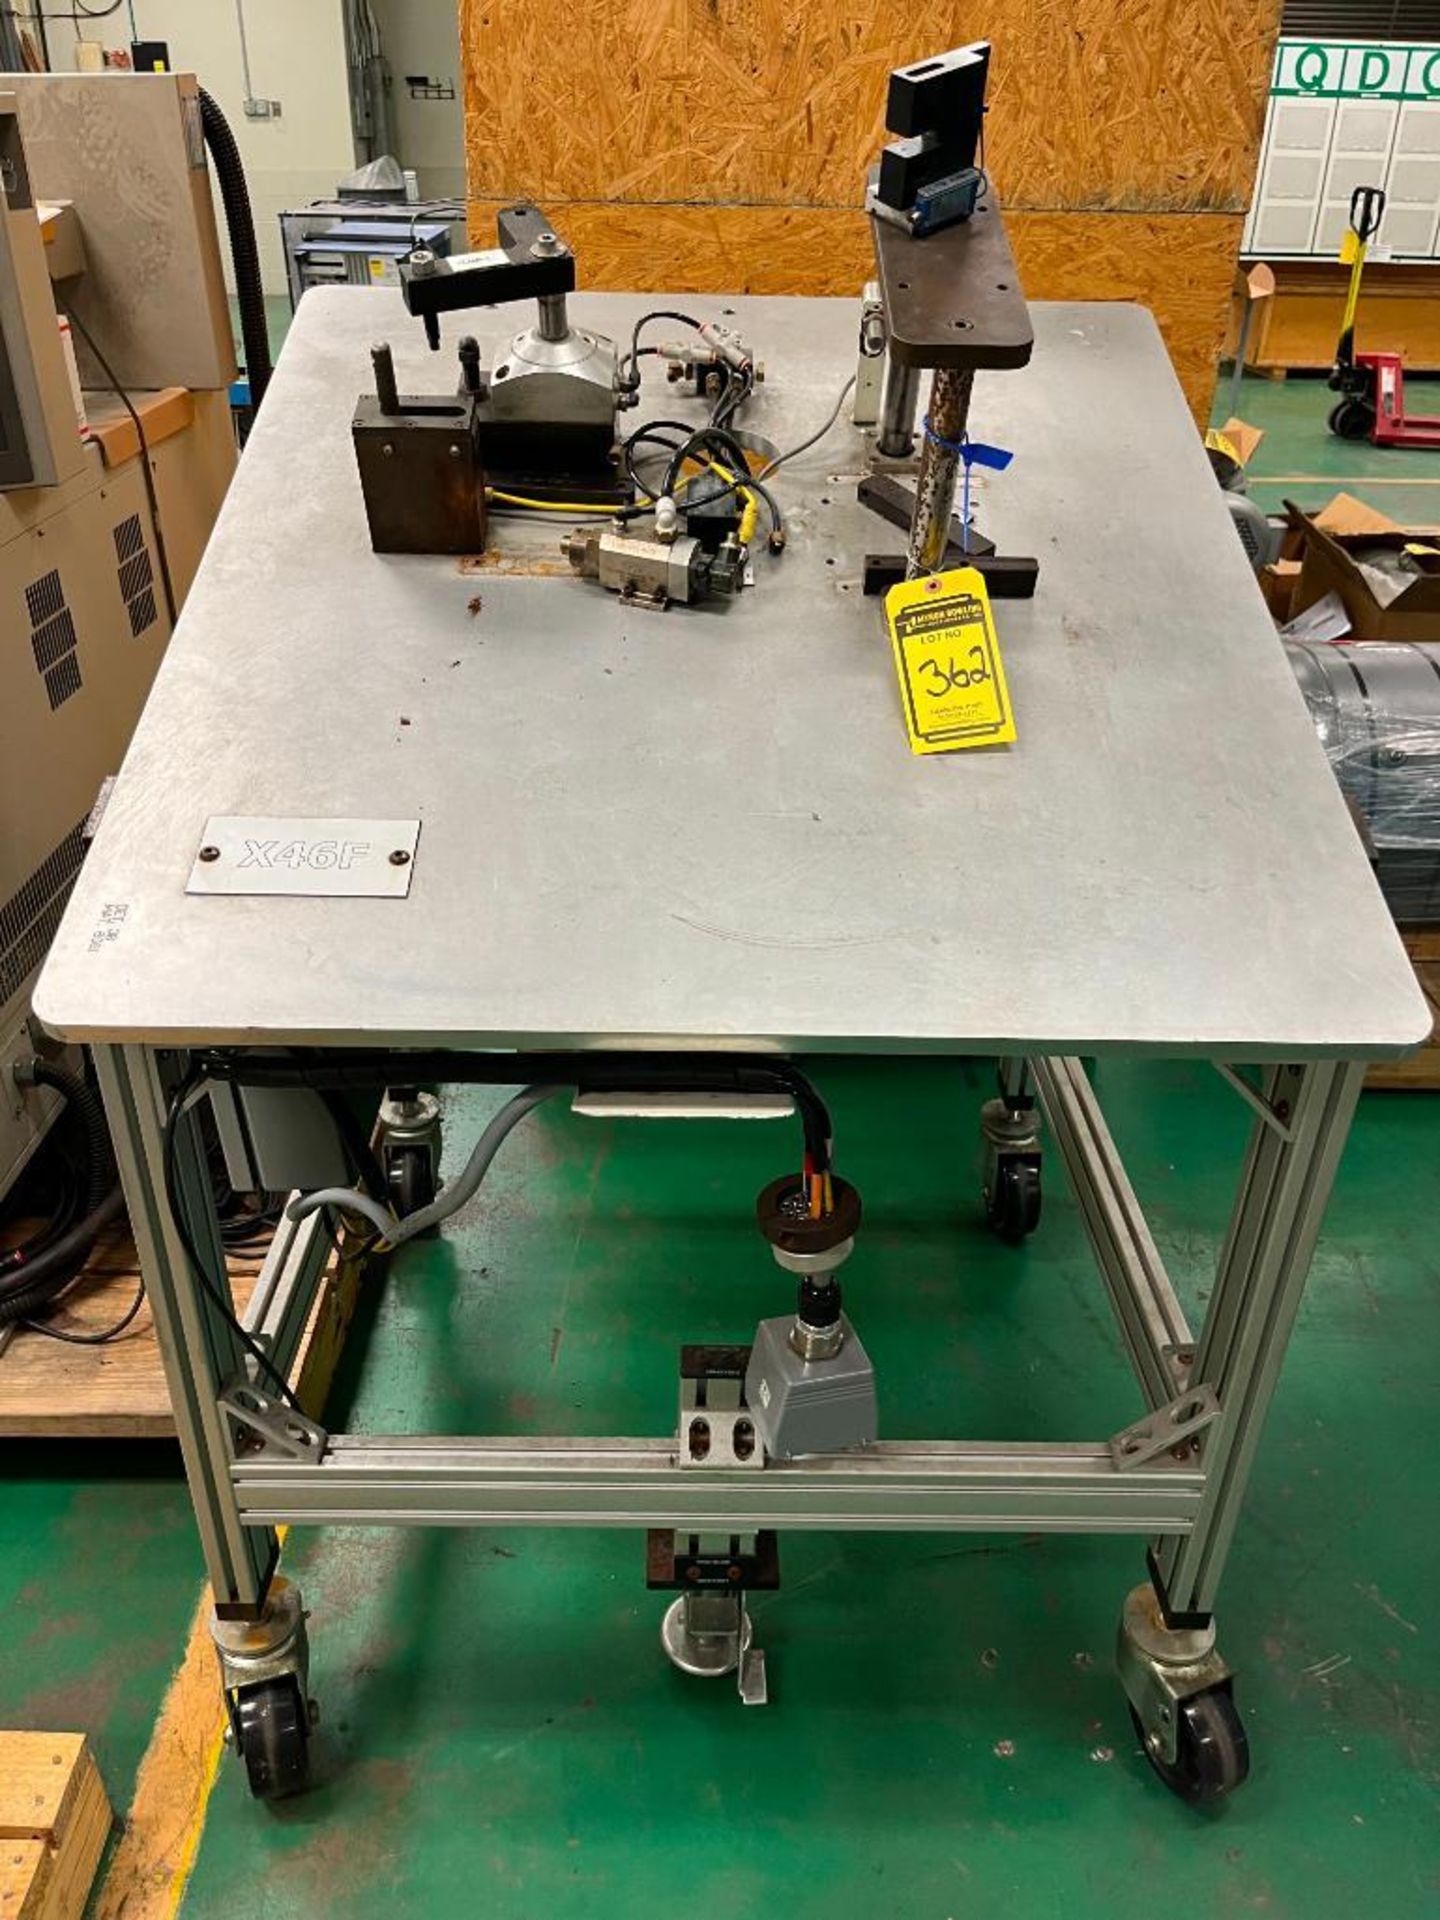 80/20 Pneumatic Press Assembly Fixture, 36" X 36", Steel Plate Top